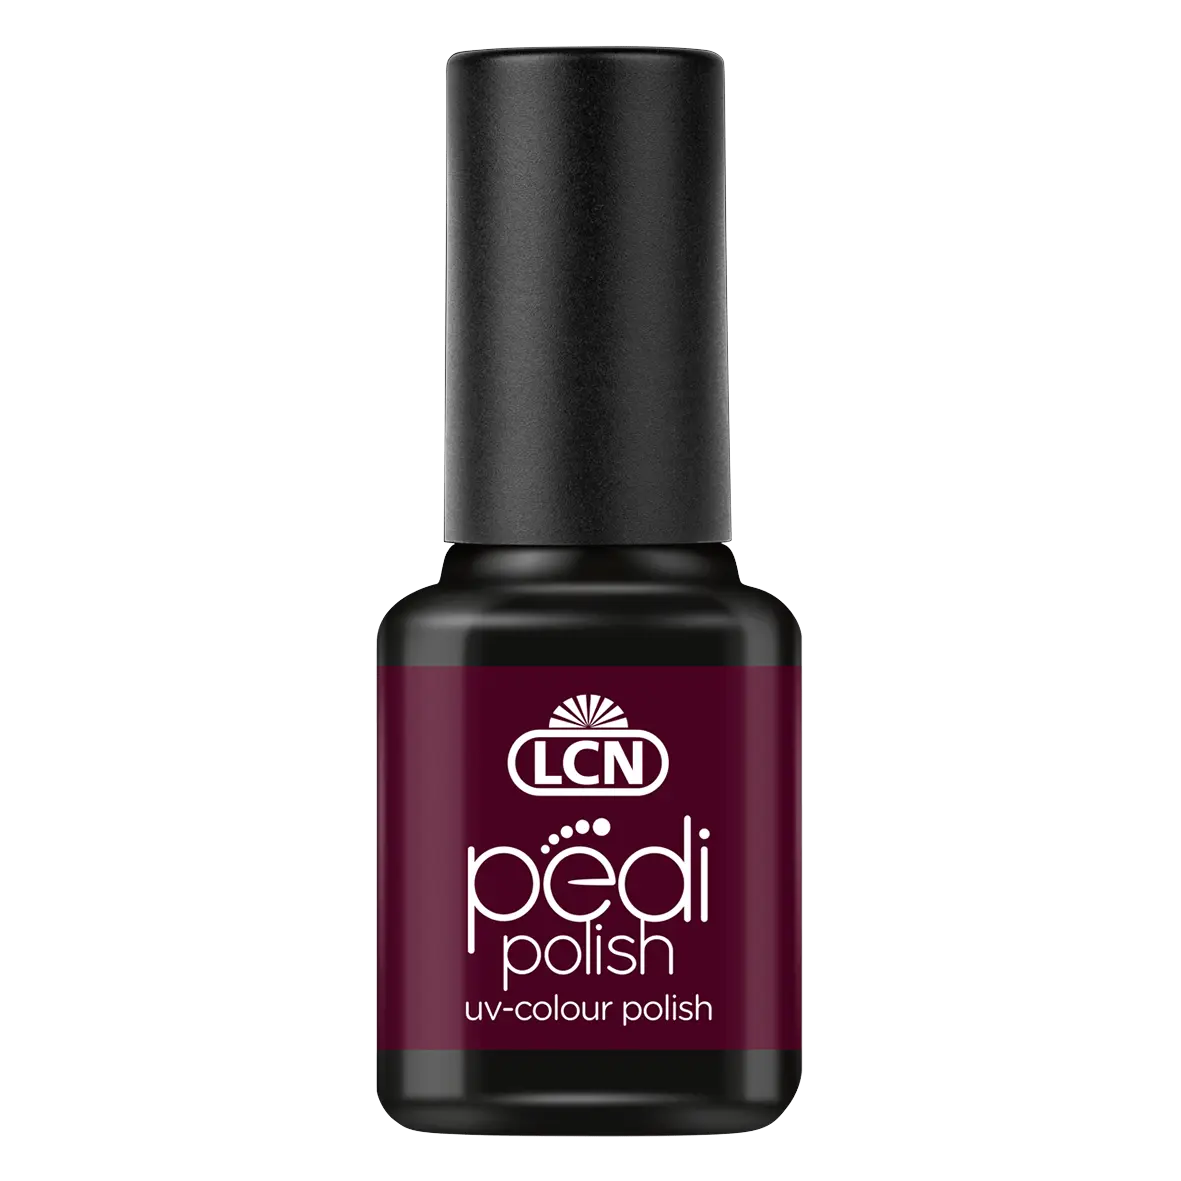 LCN Pedi Polish UV-Colour Polish - dark cherry 8 ml